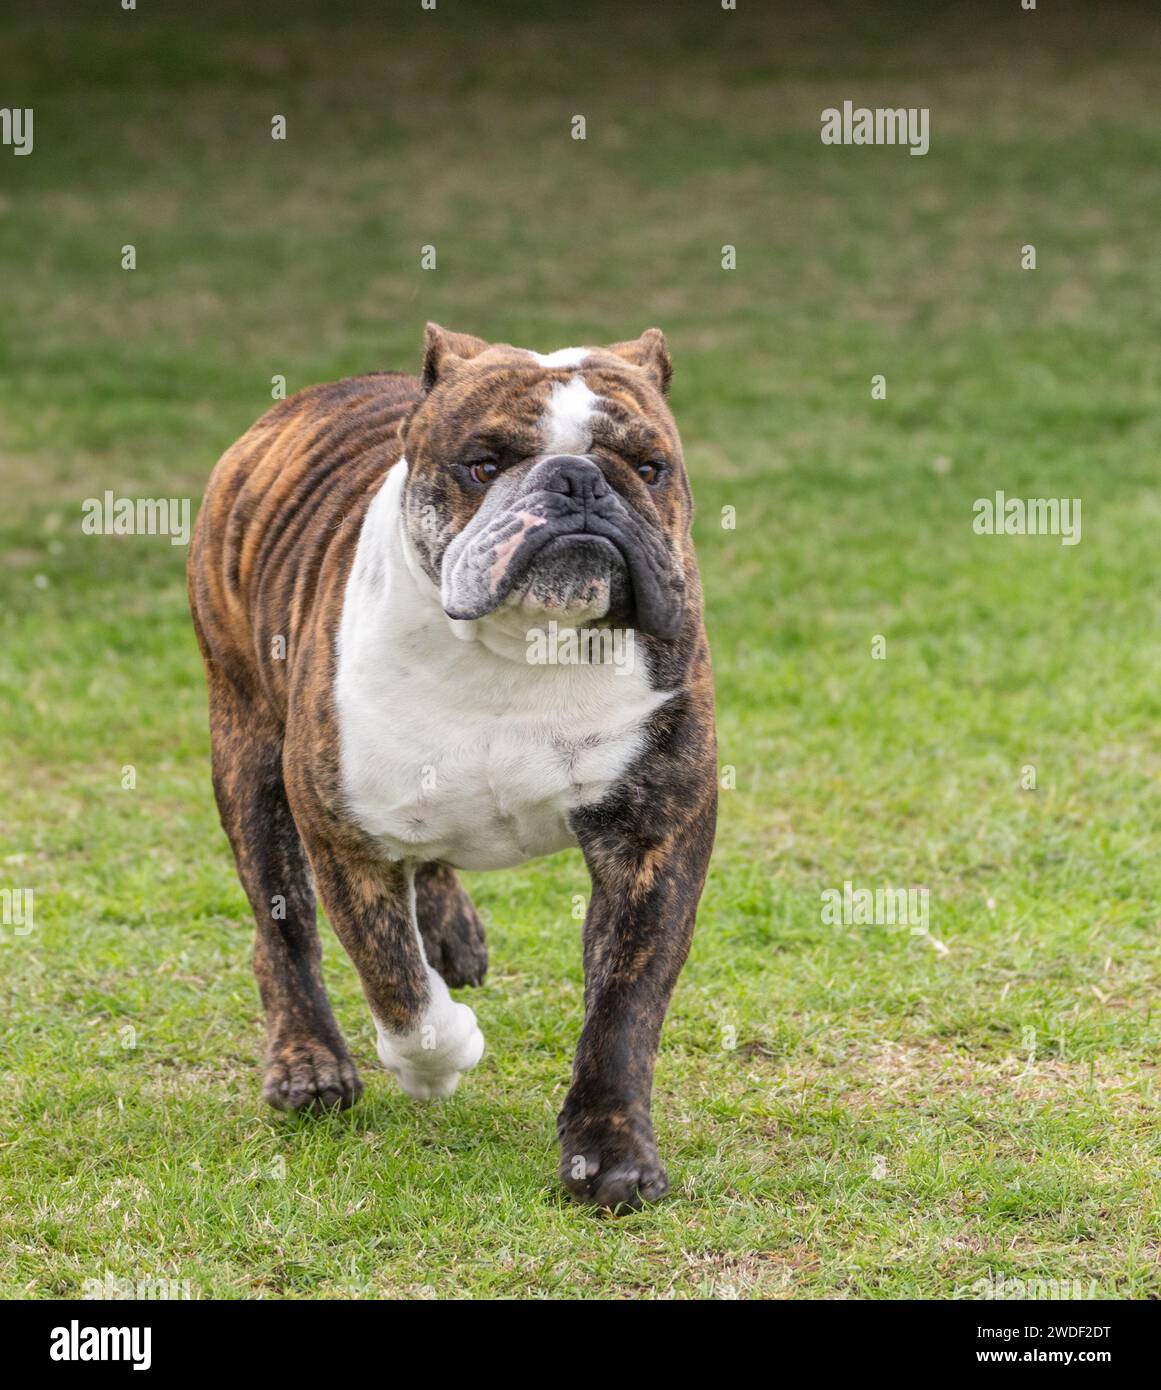 Grumpy faced brindle  English Bulldog walking across the grass Stock Photo